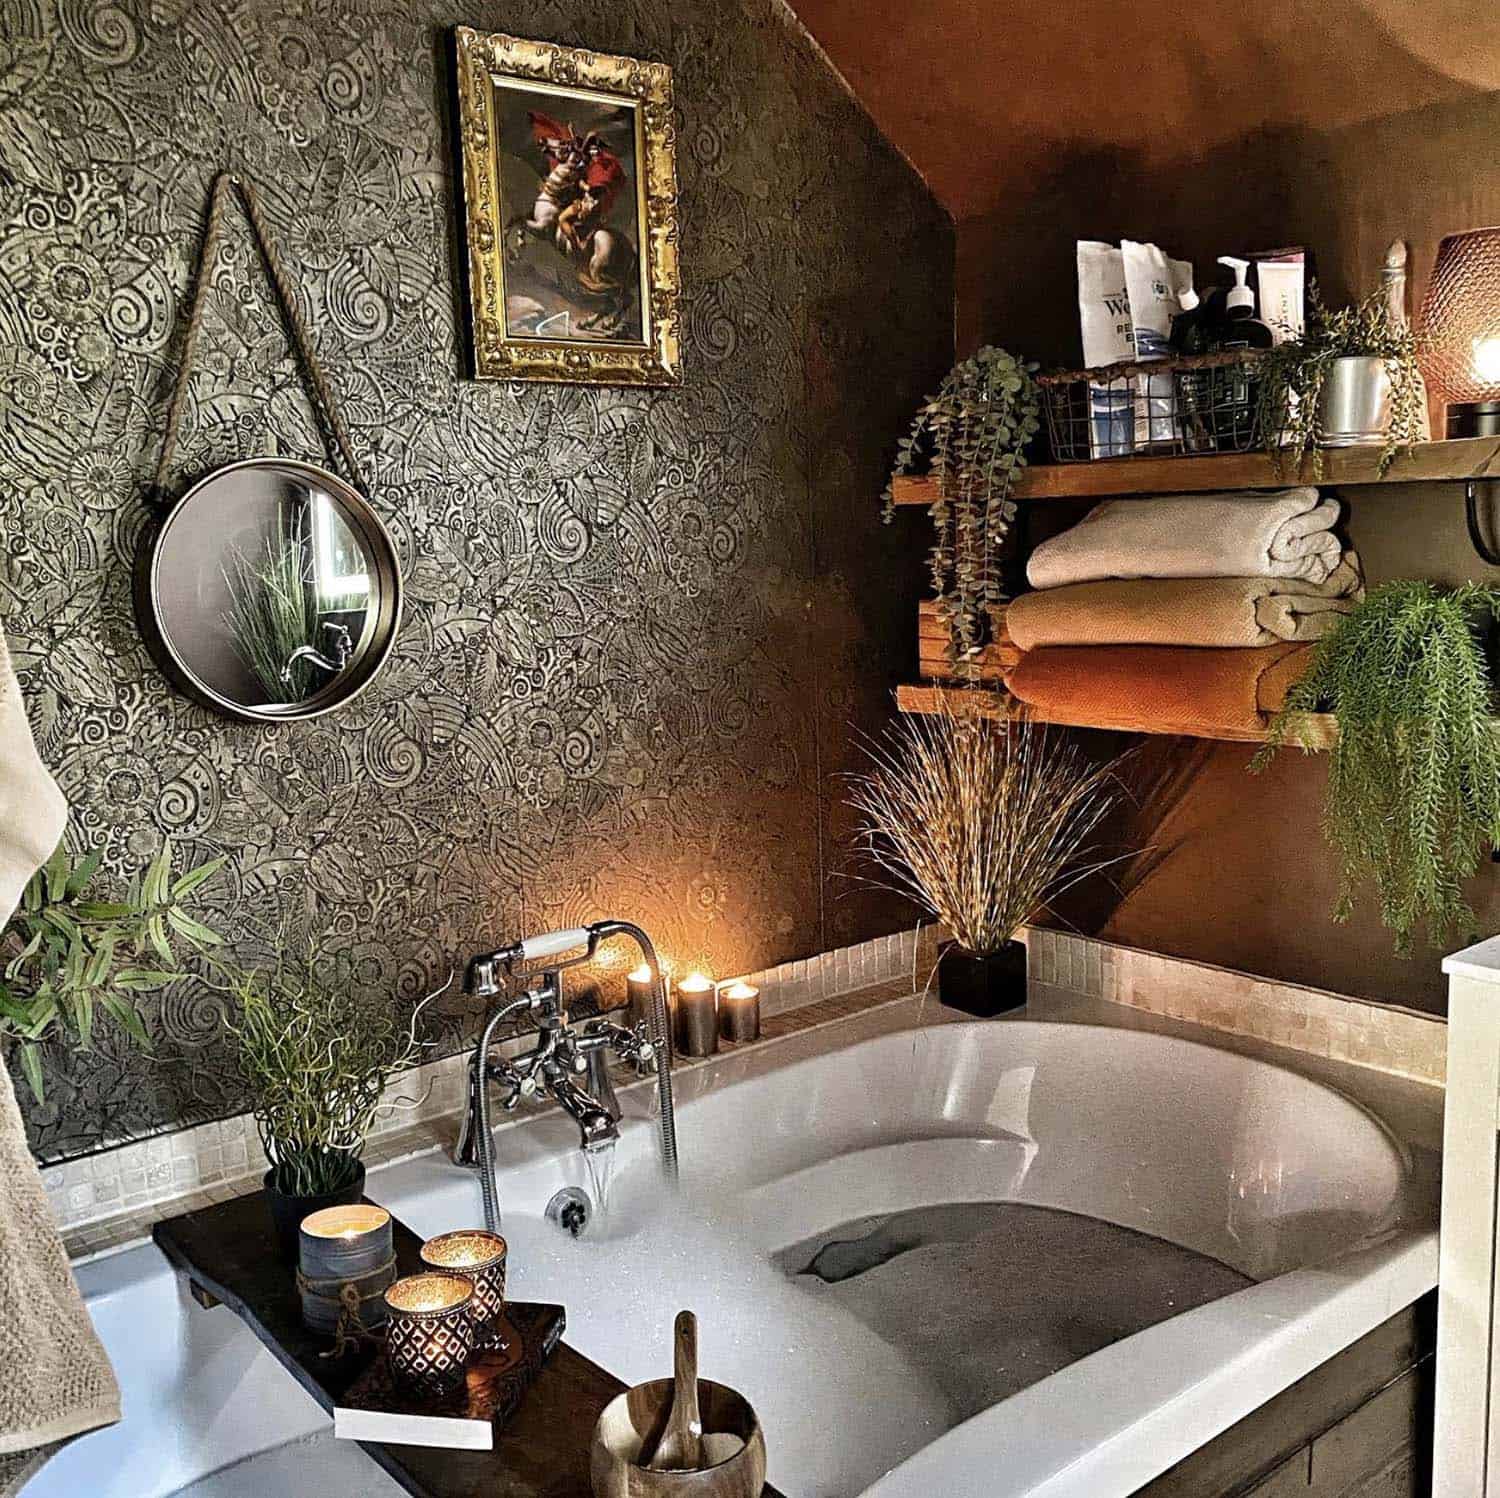 dark and moody rustic bathroom with a soaking tub